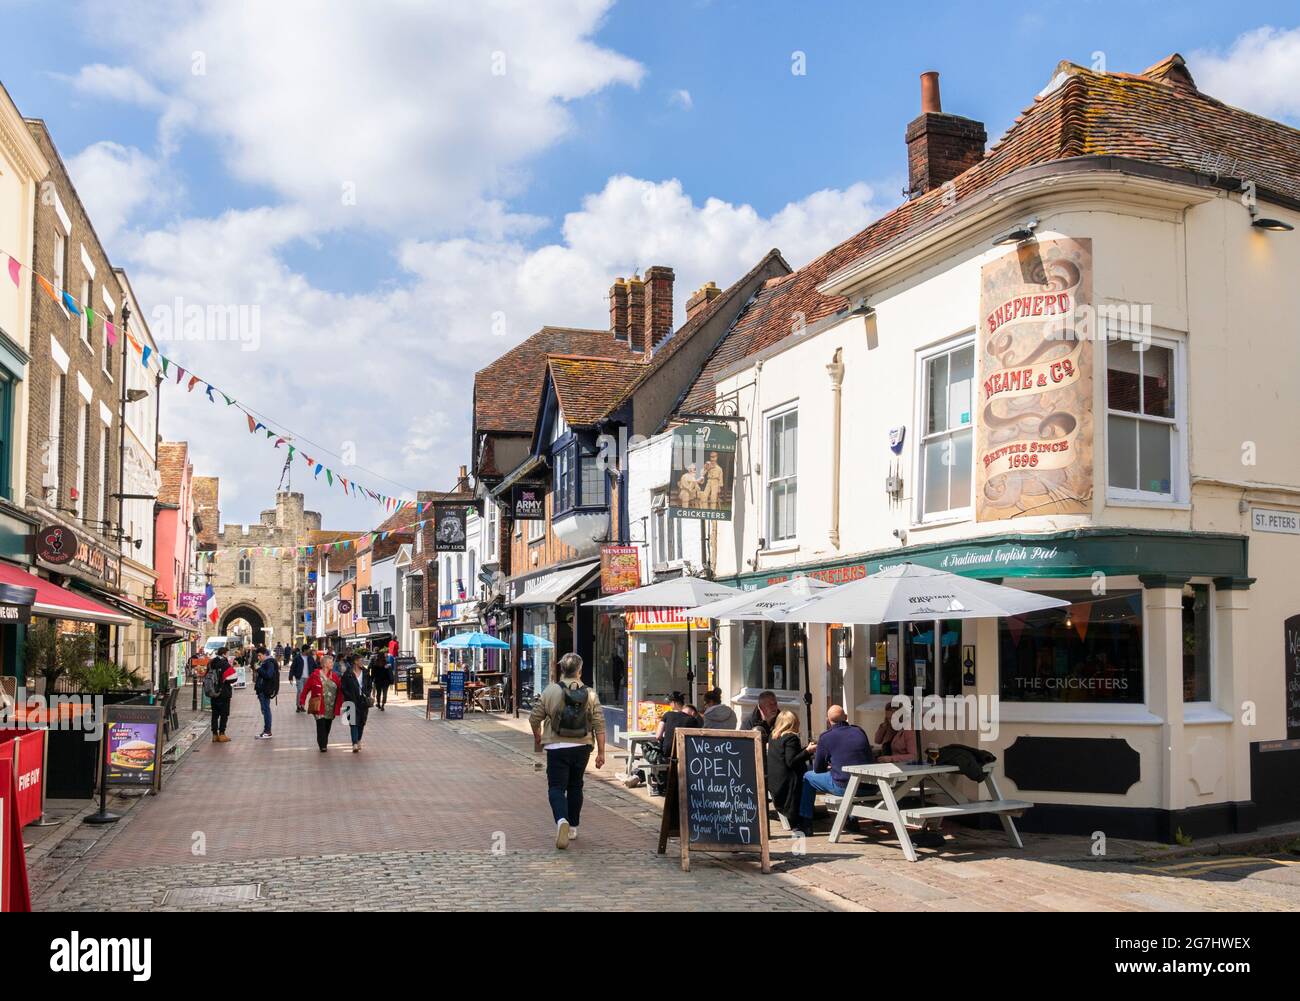 The Cricketers un pub anglais animé sur High Street et St Peter's Street, Canterbury, Kent Angleterre GB Europe Banque D'Images